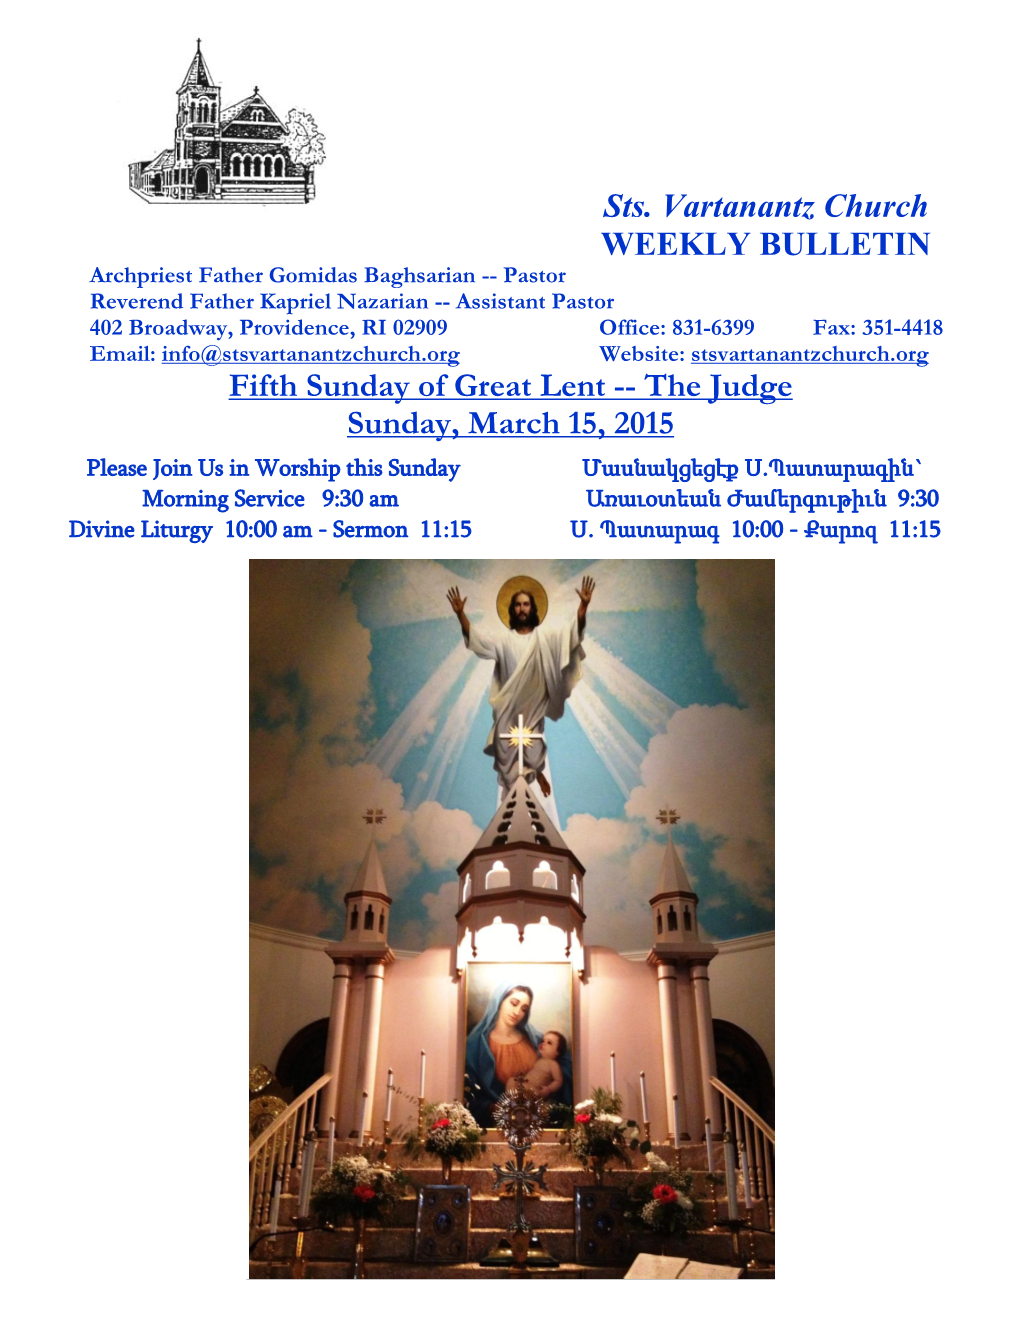 Sts. Vartanantz Church WEEKLY BULLETIN Fifth Sunday of Great Lent